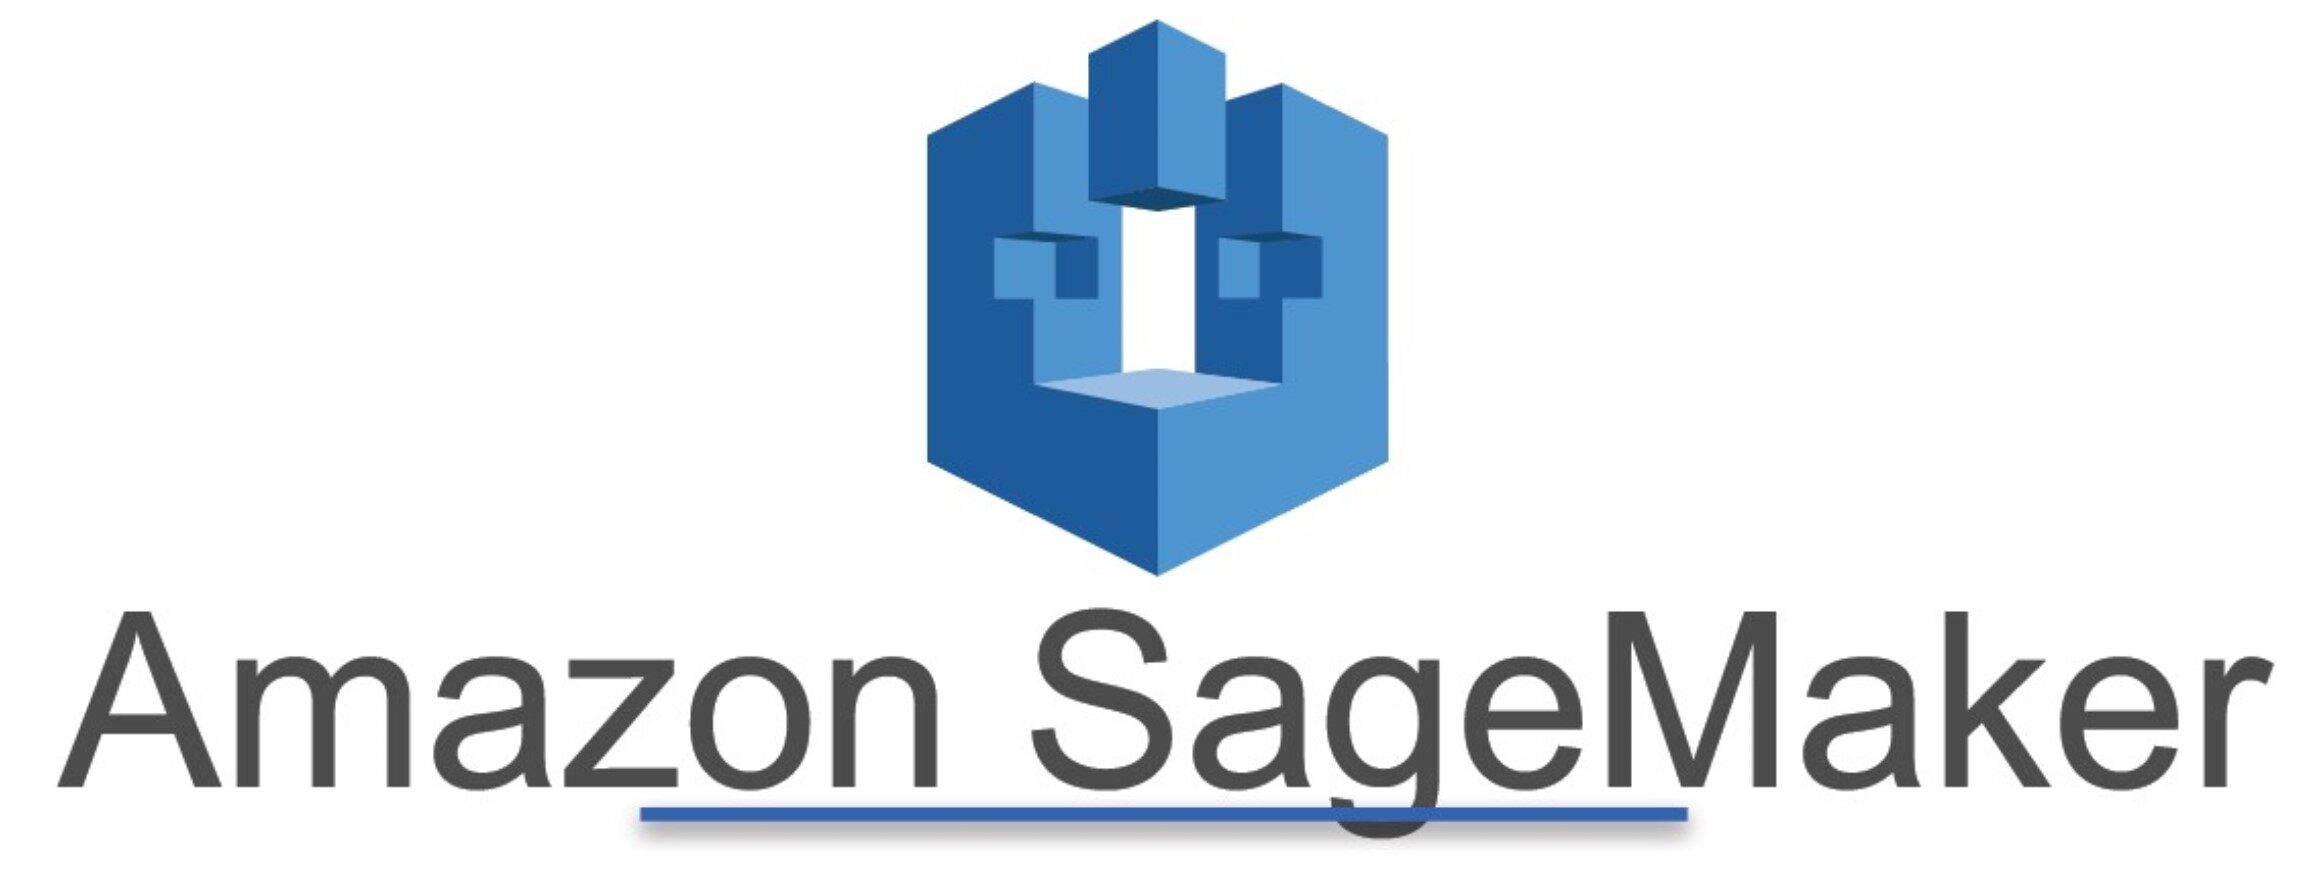 Amazon SageMaker 增加批量转换功能和适用于 TensorFlow 容器的管道输入模式